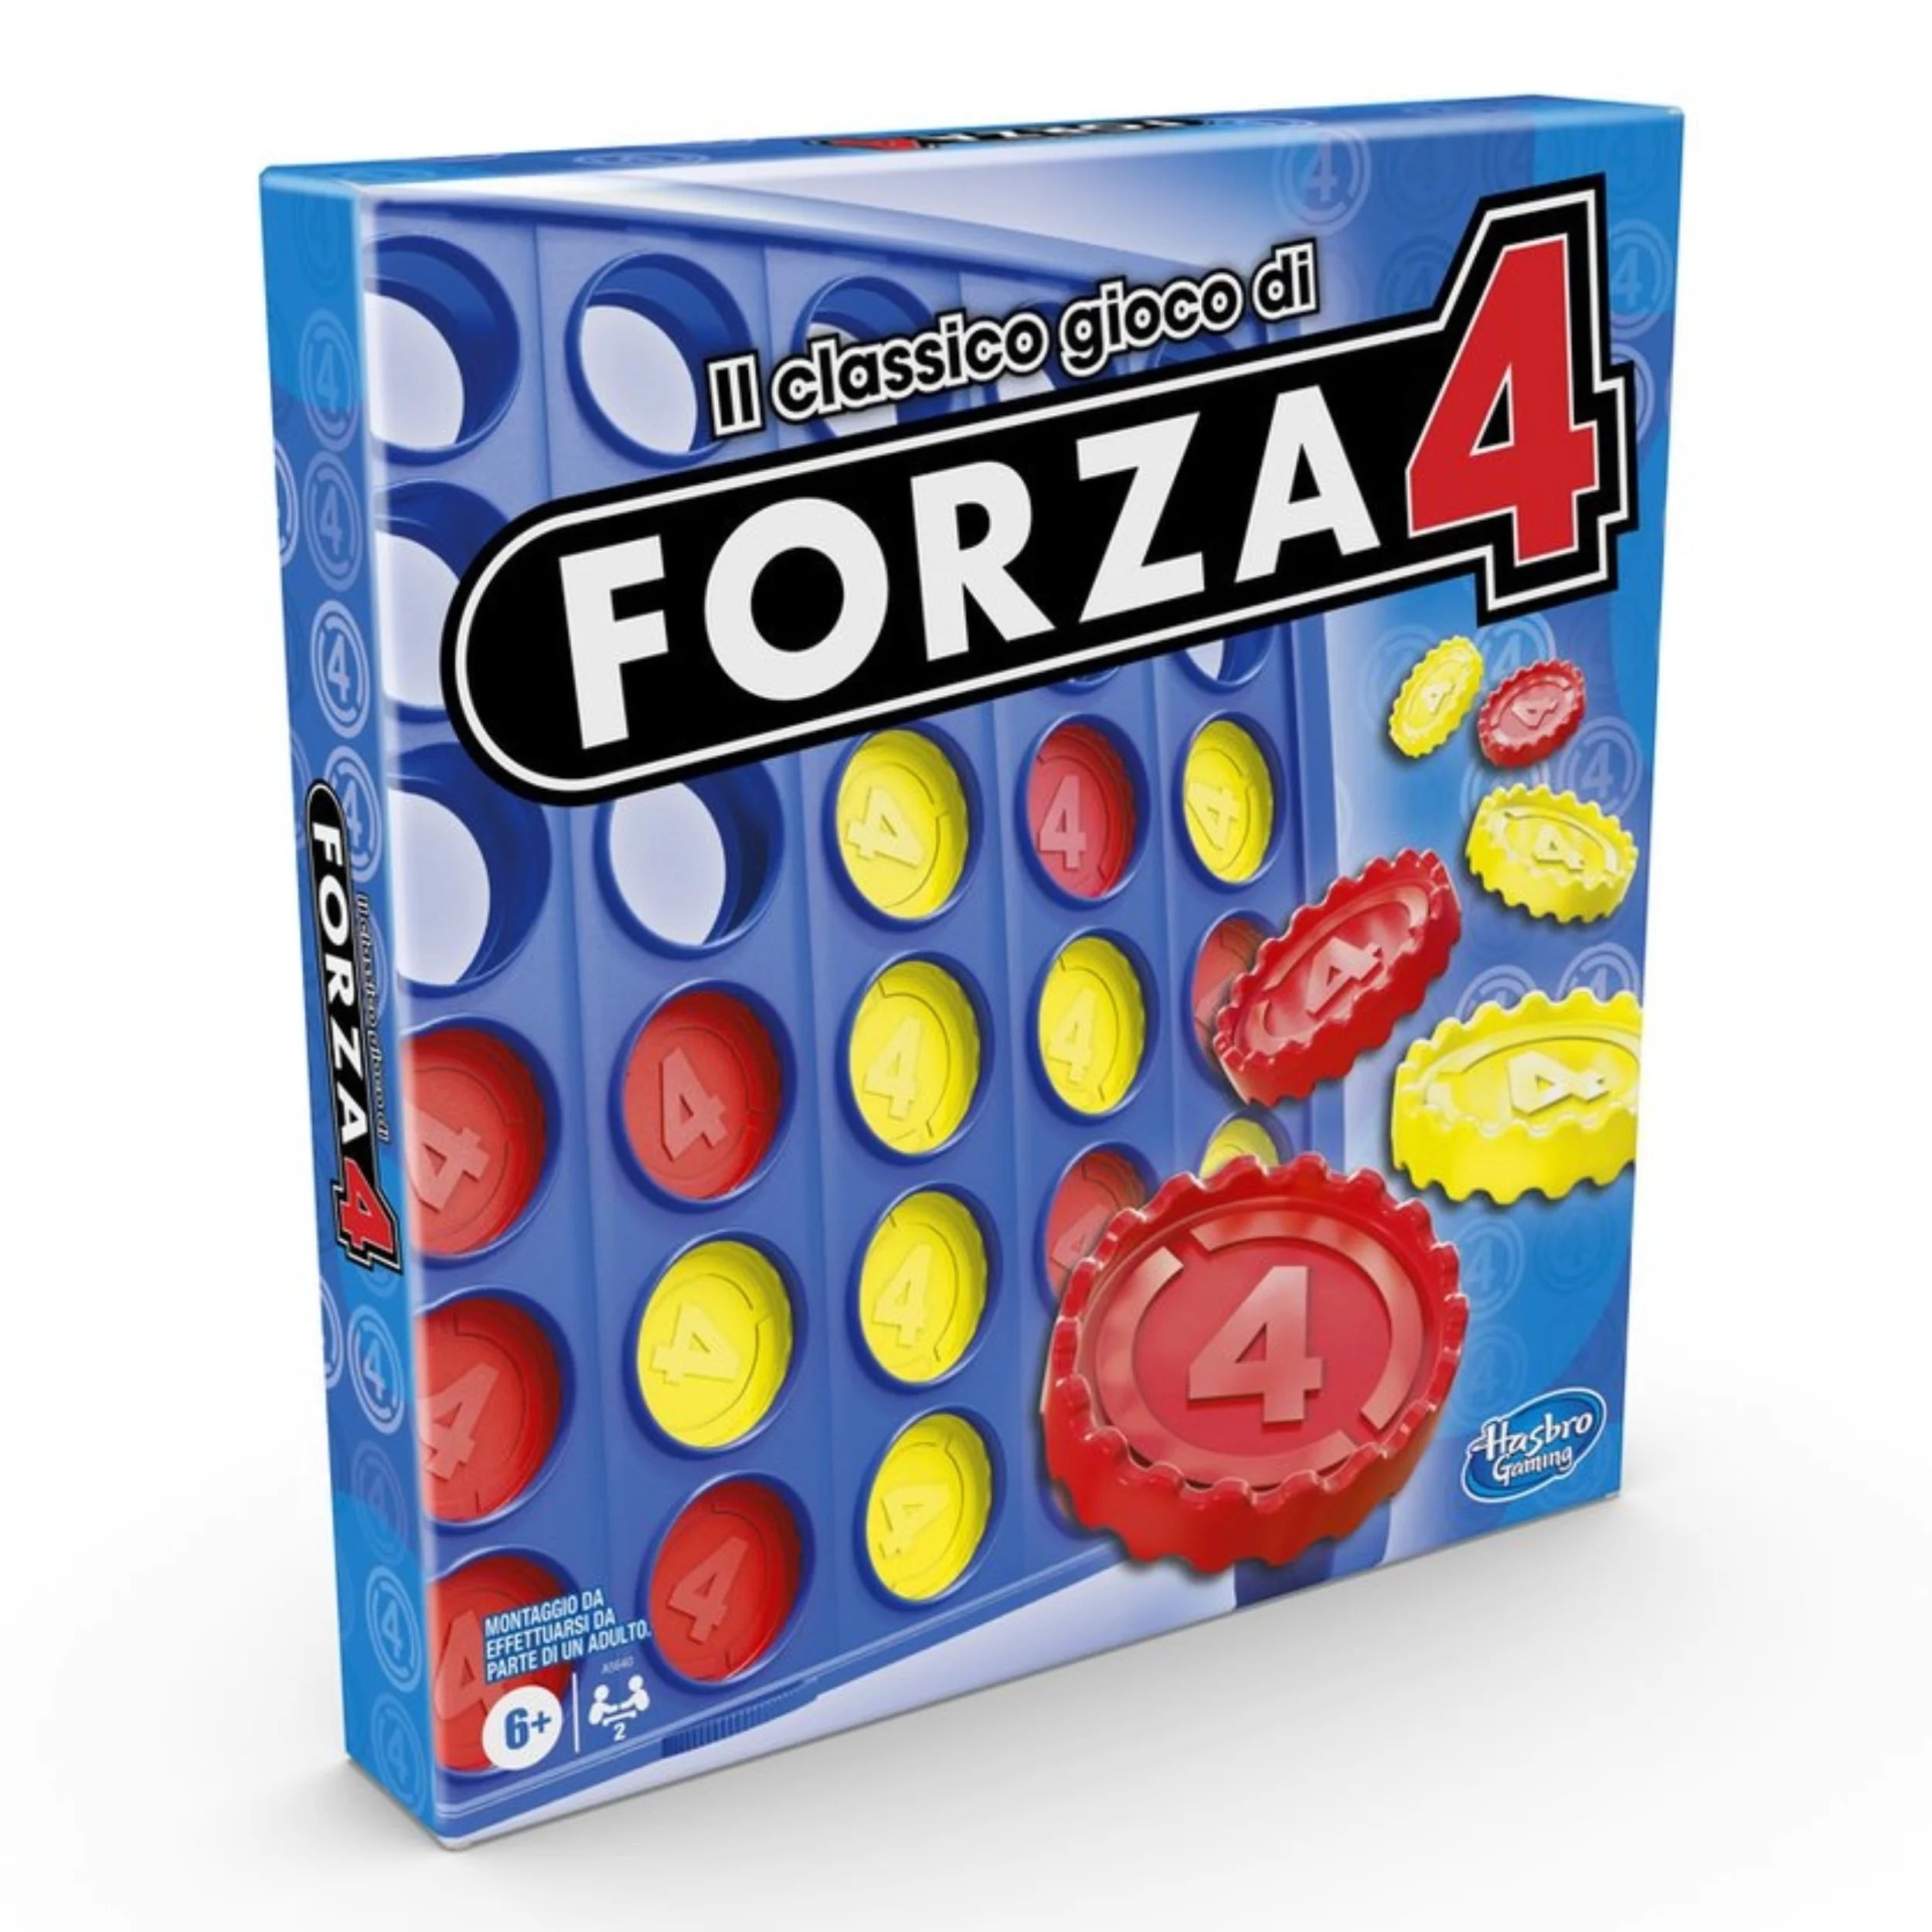 Hasbro - Forza 4 Family Game - Board Game HSBA5640IT0